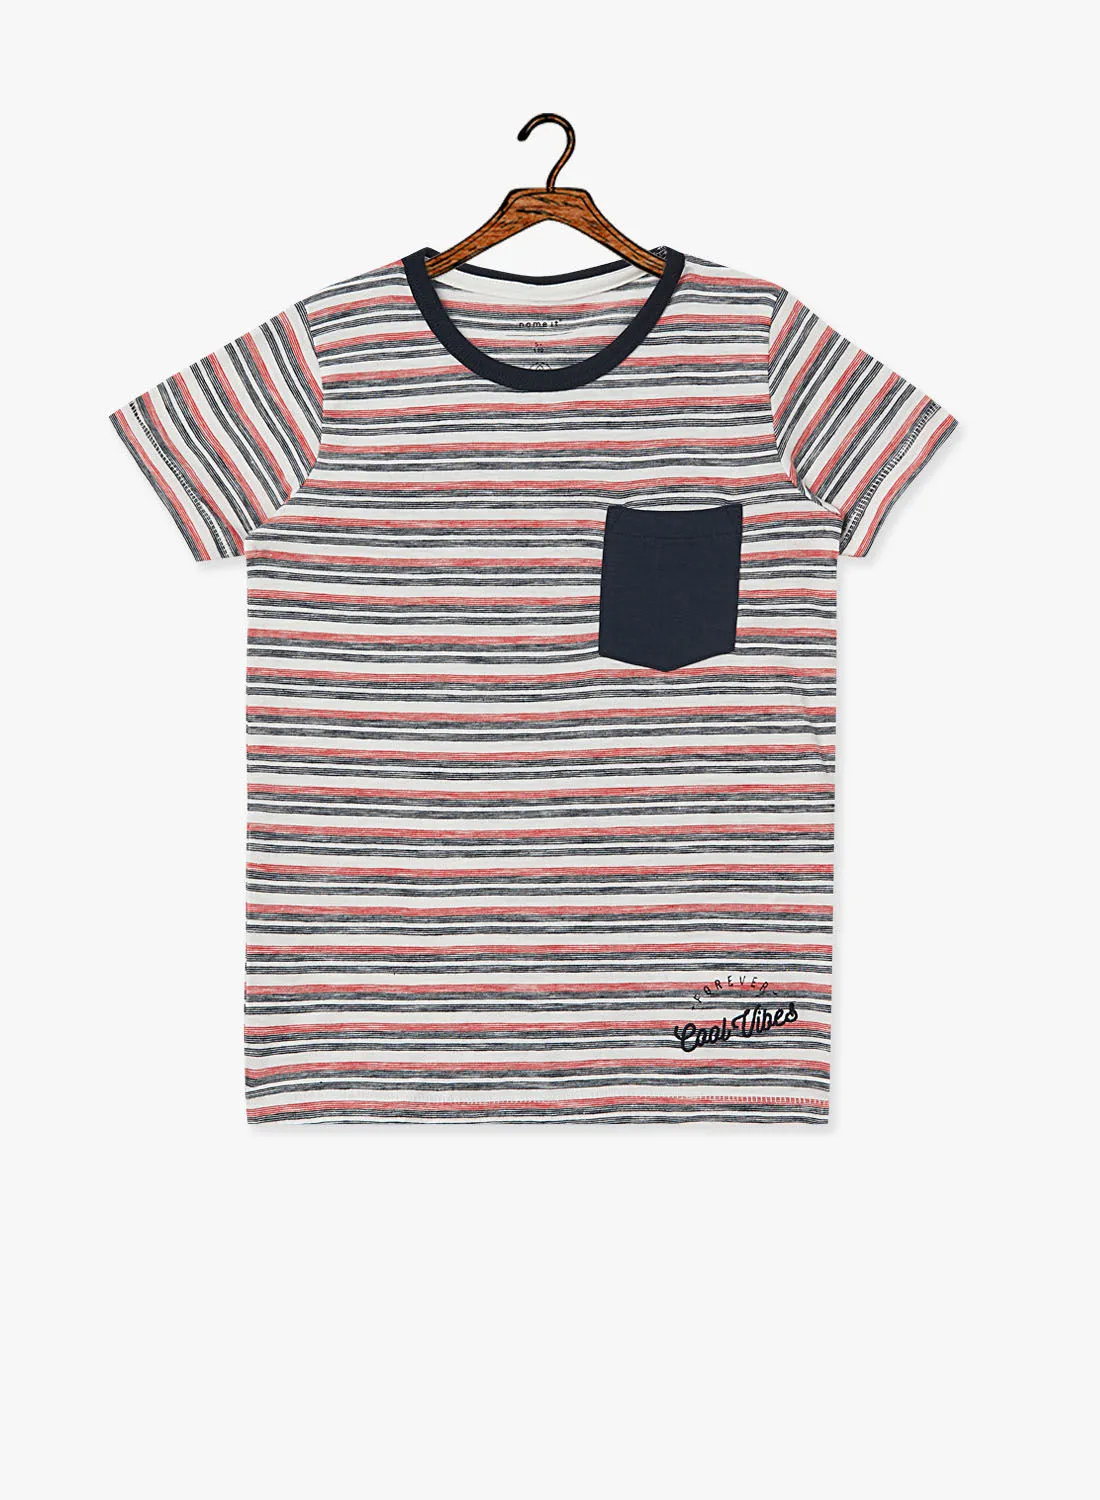 NAME IT Kids Striped T-Shirt White/Navy